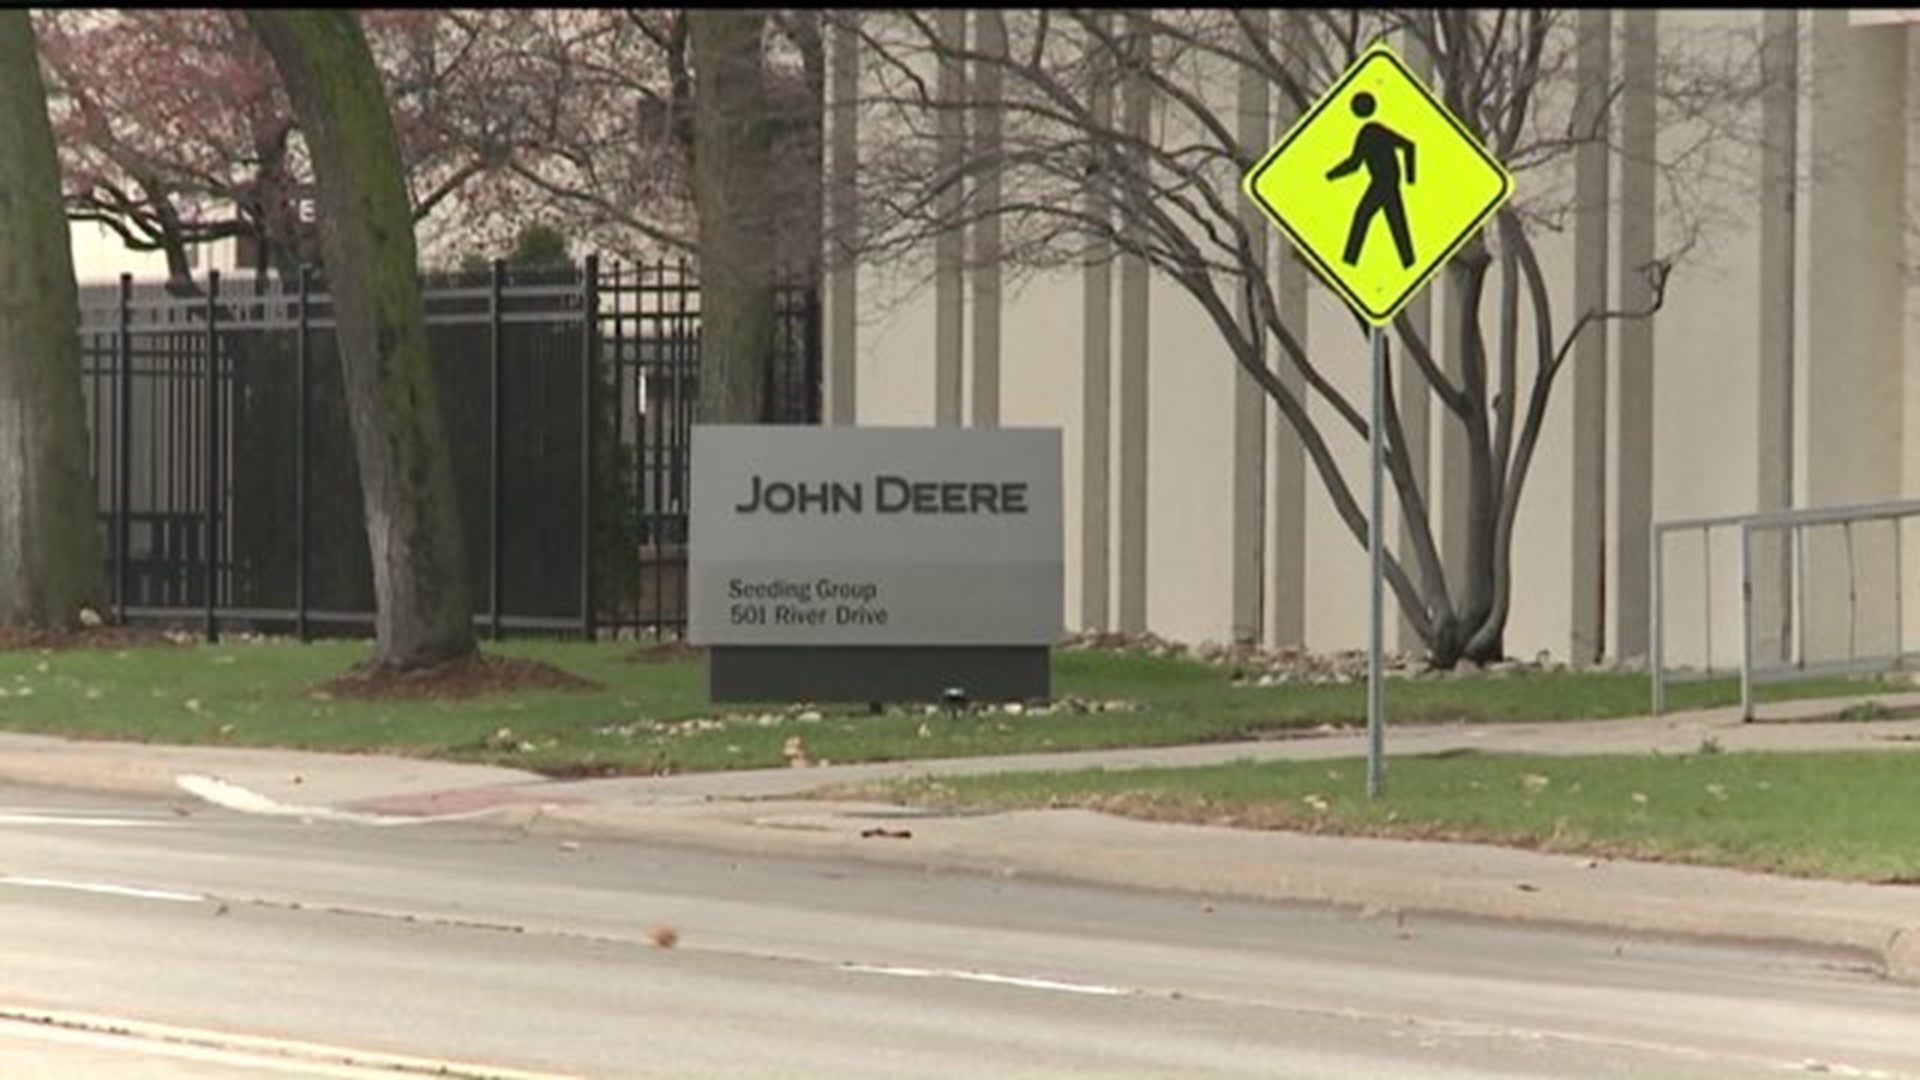 John Deere Layoffs